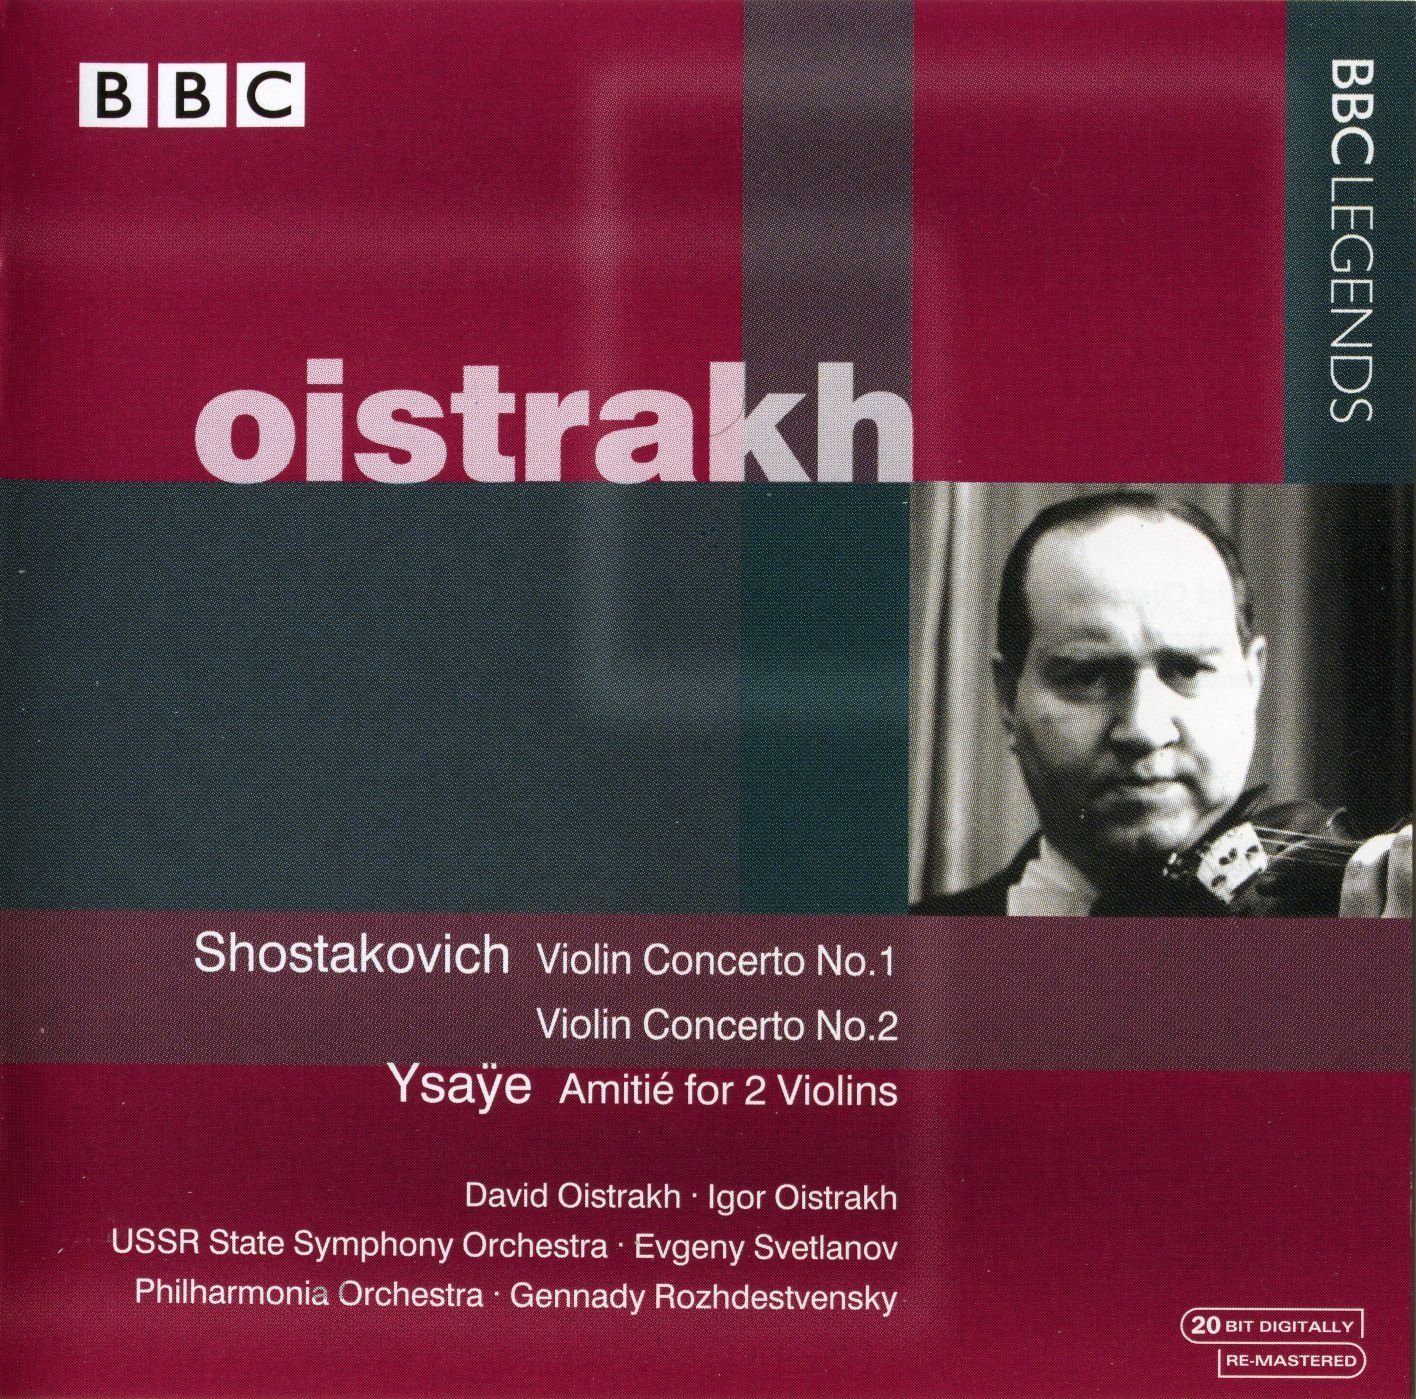 Шостакович на обложке time. Dmitri Shostakovich Violin Concerto Nr 1 Kogan. Обложка альбома Шостакович.